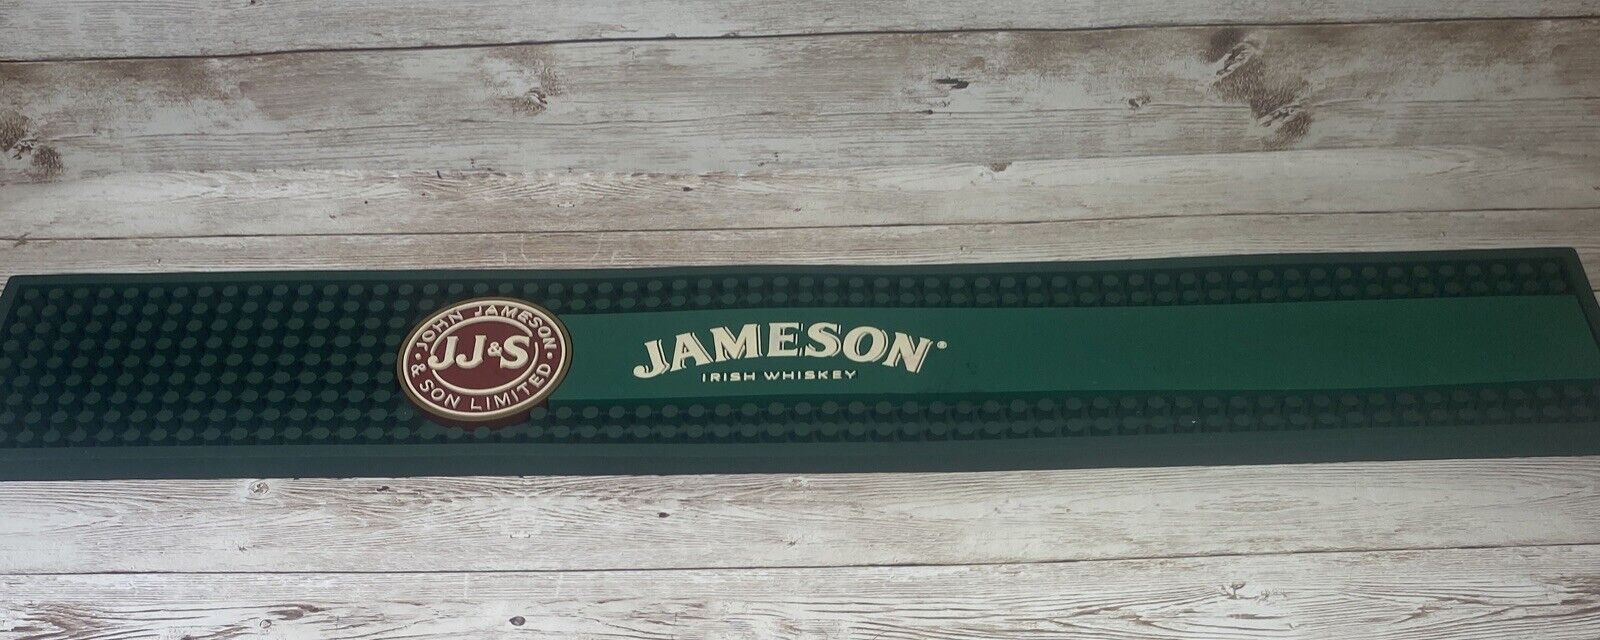 Jameson Irish Whiskey Bar Mat, Green Rubber, JJ&S Logo 20.75”